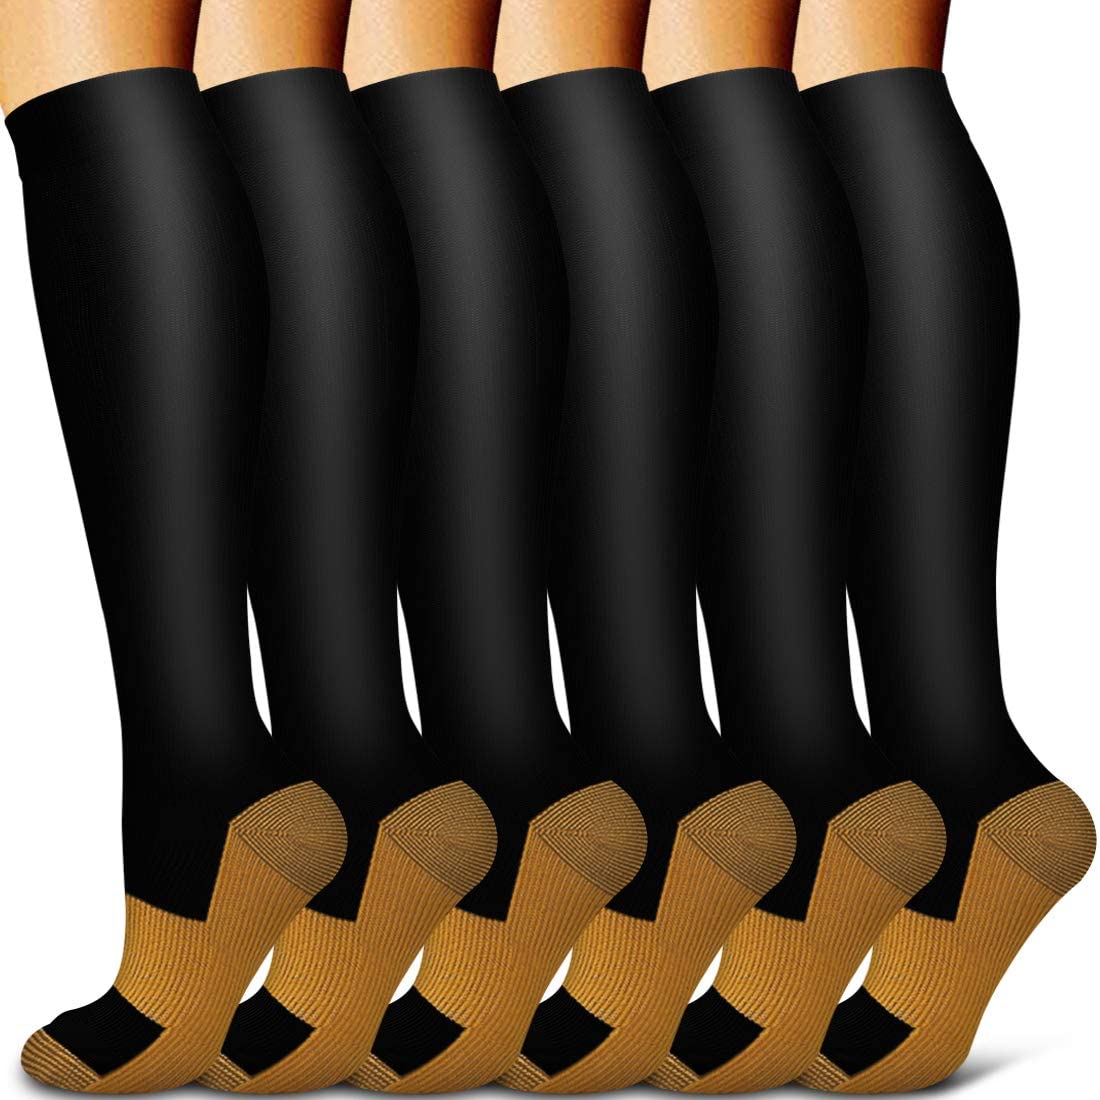  BLUEENJOY Copper Compression Socks for Women & Men (6